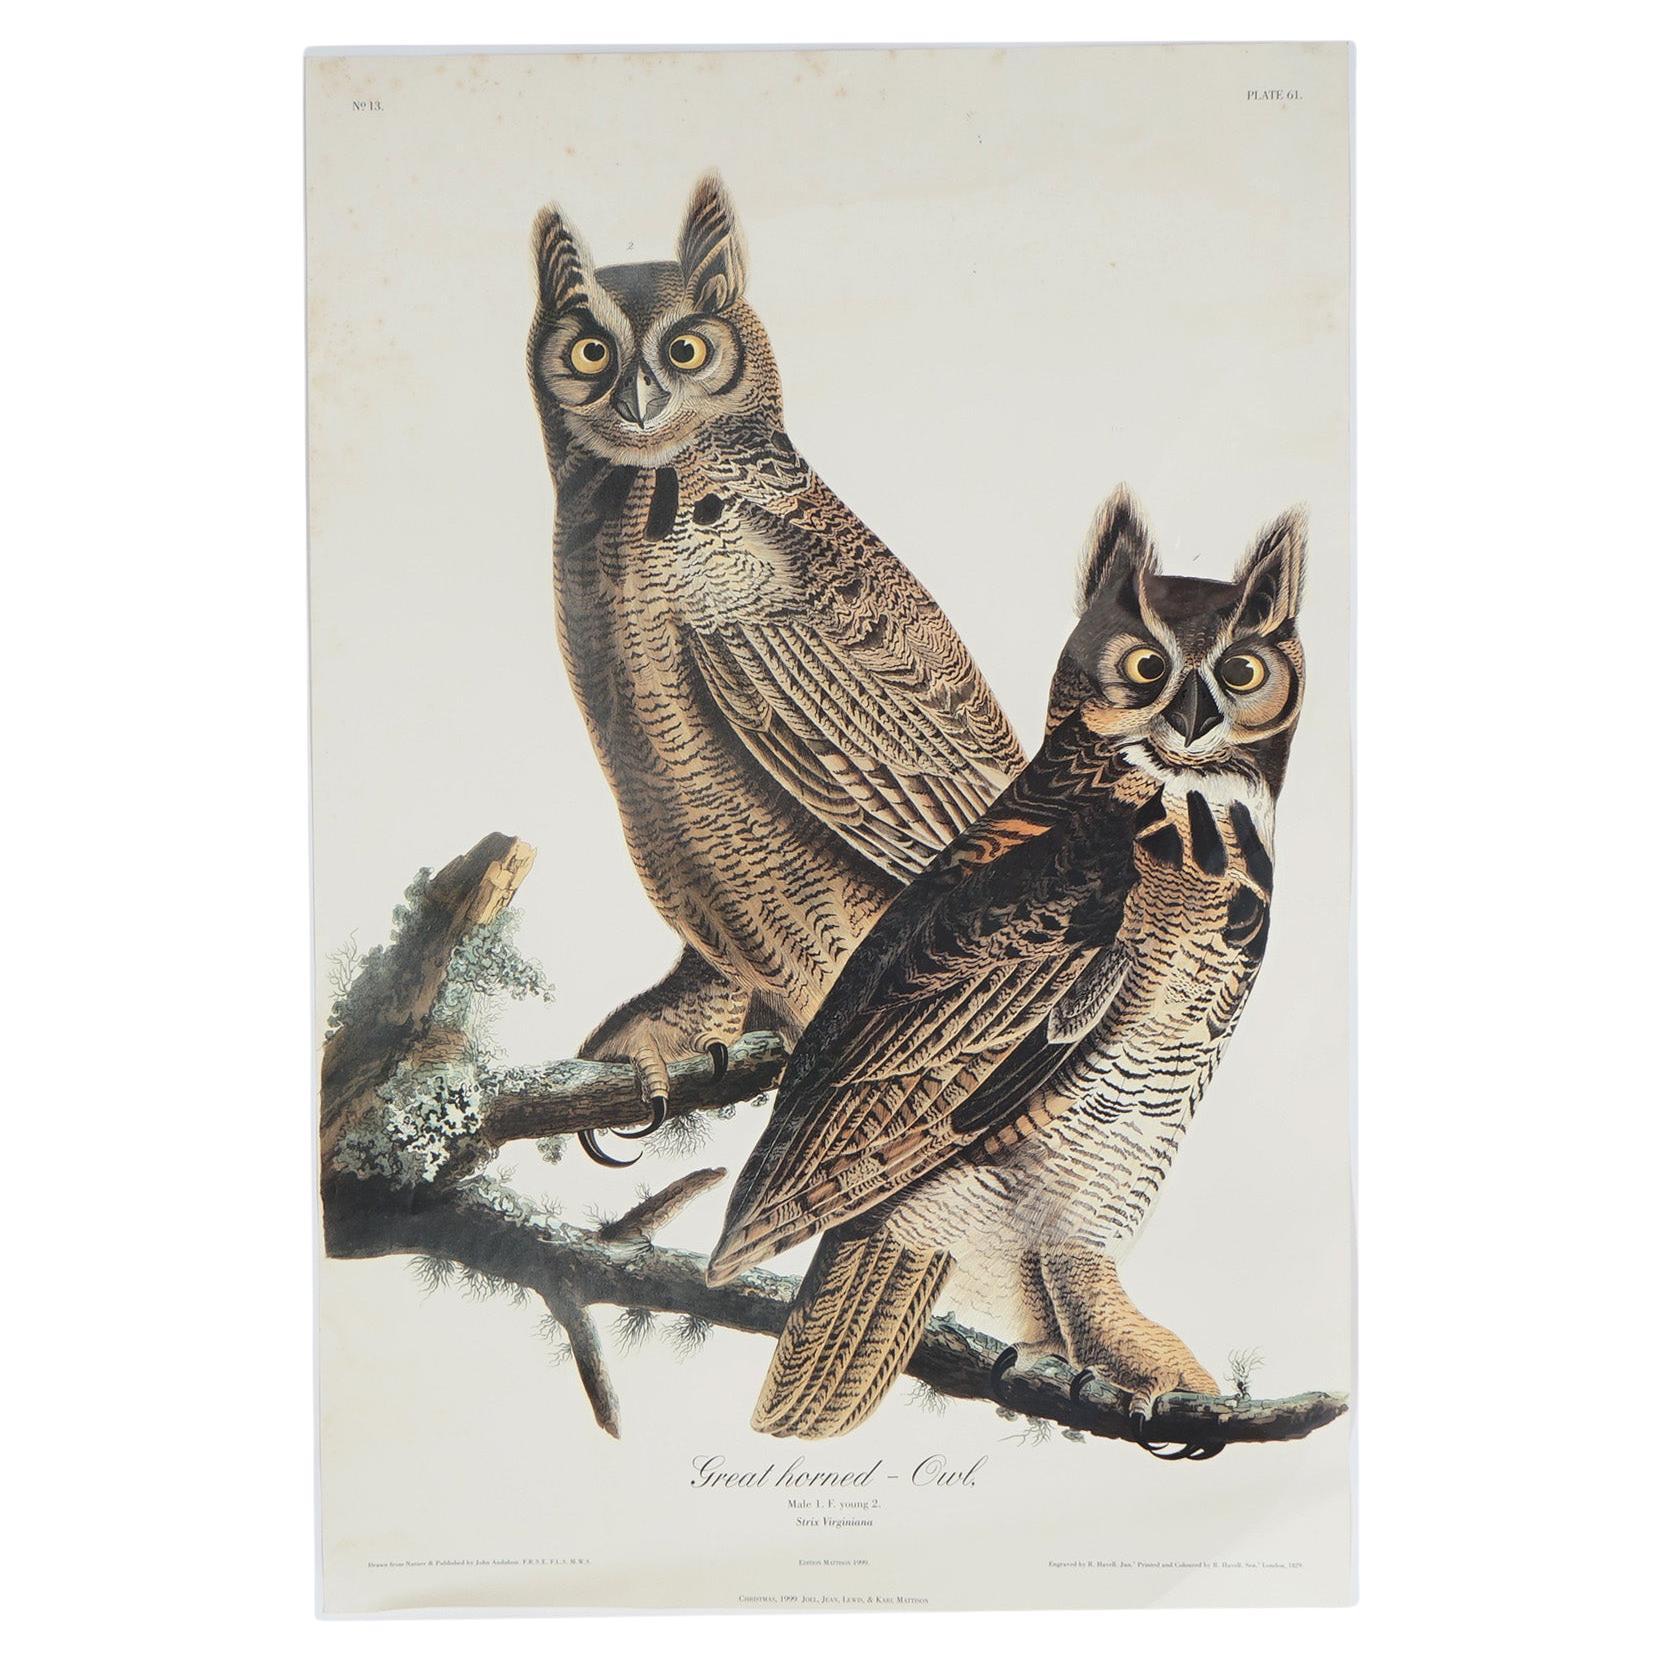 R. Havell Double Elephant Folio Audubon Druck von Great Horned Owls C1999